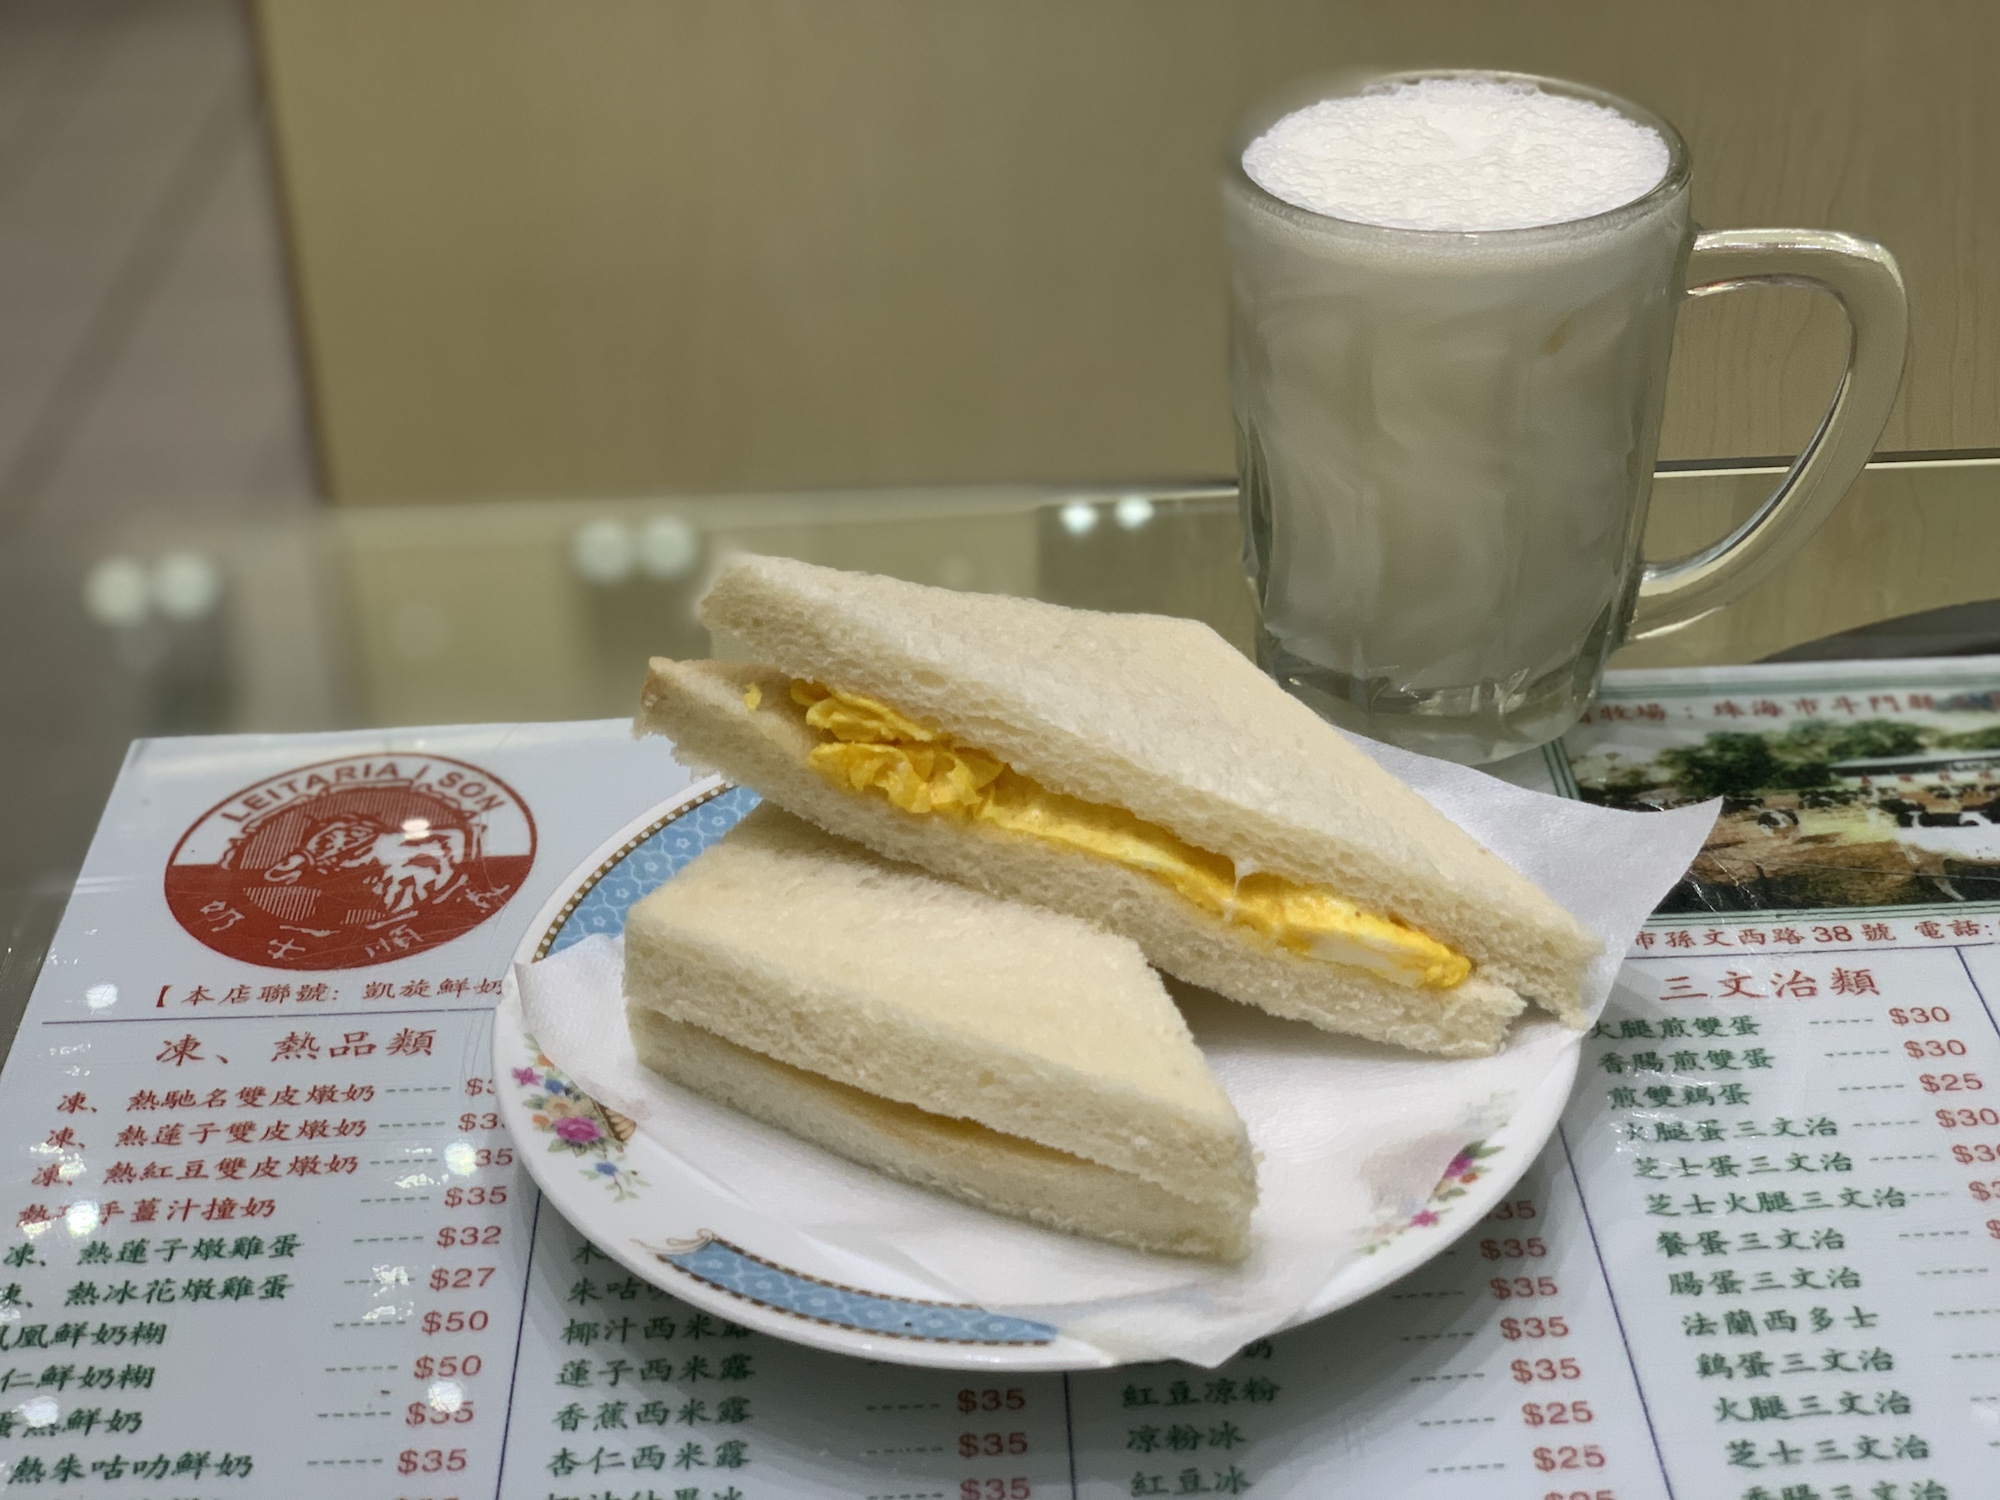 Leitaria I Son Interior Banana Milkshake and Egg Sandwich on the Right Side Macau Lifestyle